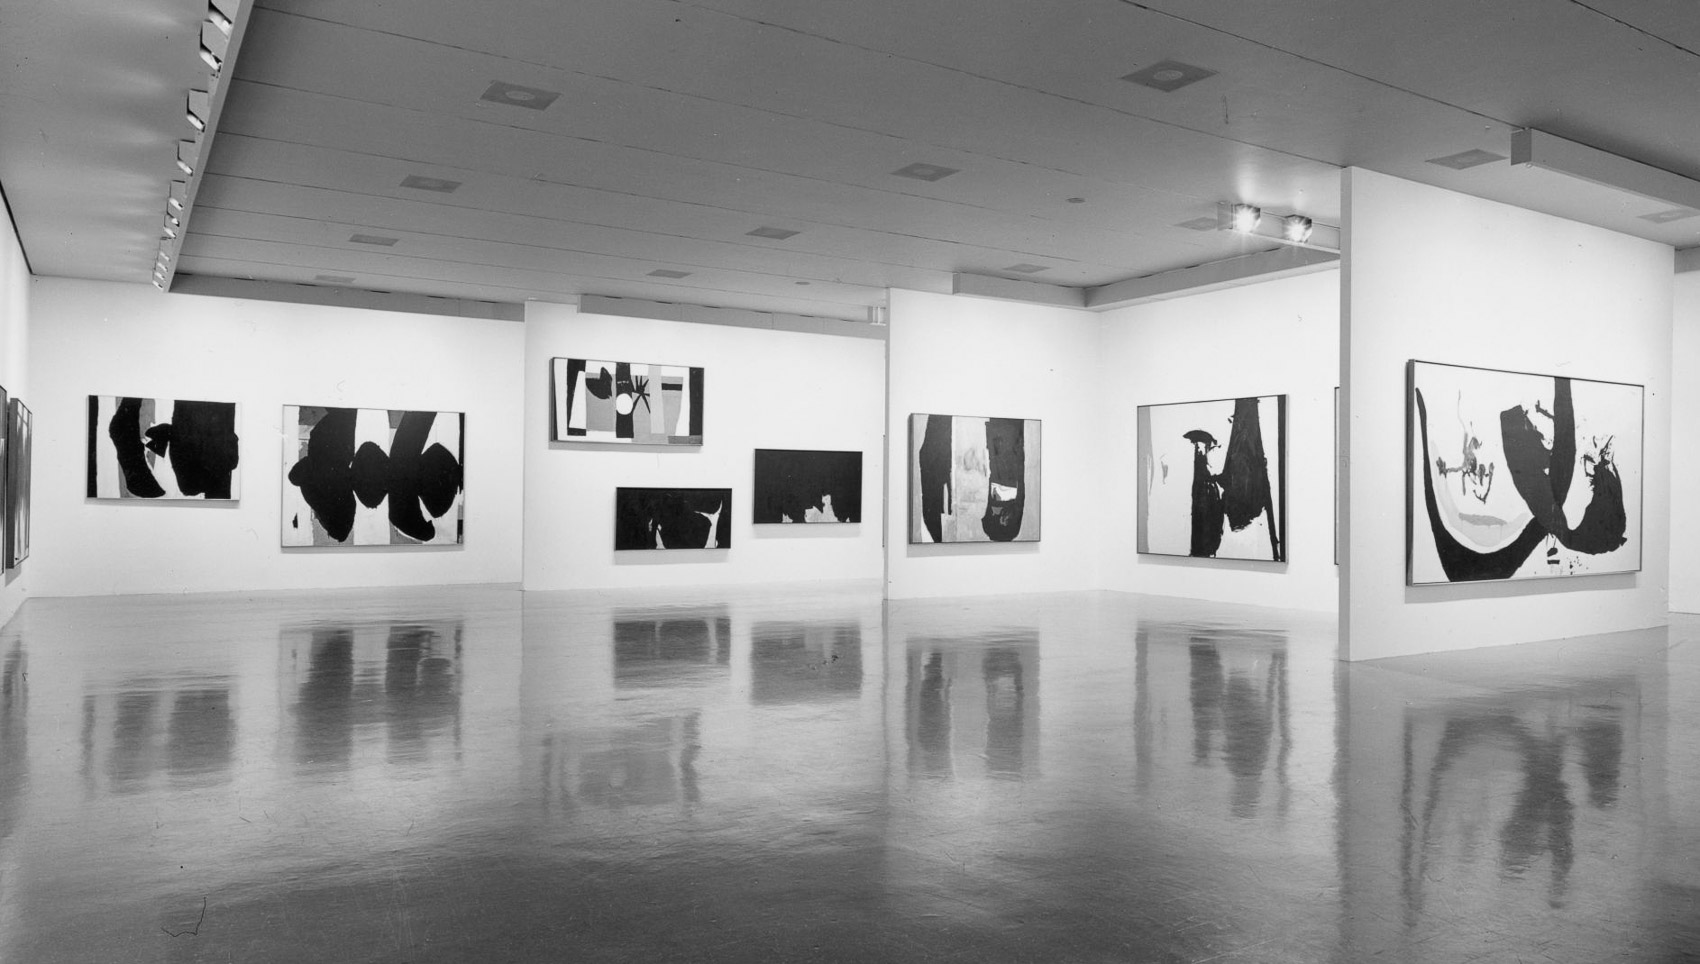 Installation image, Museum of Modern Art, 1959